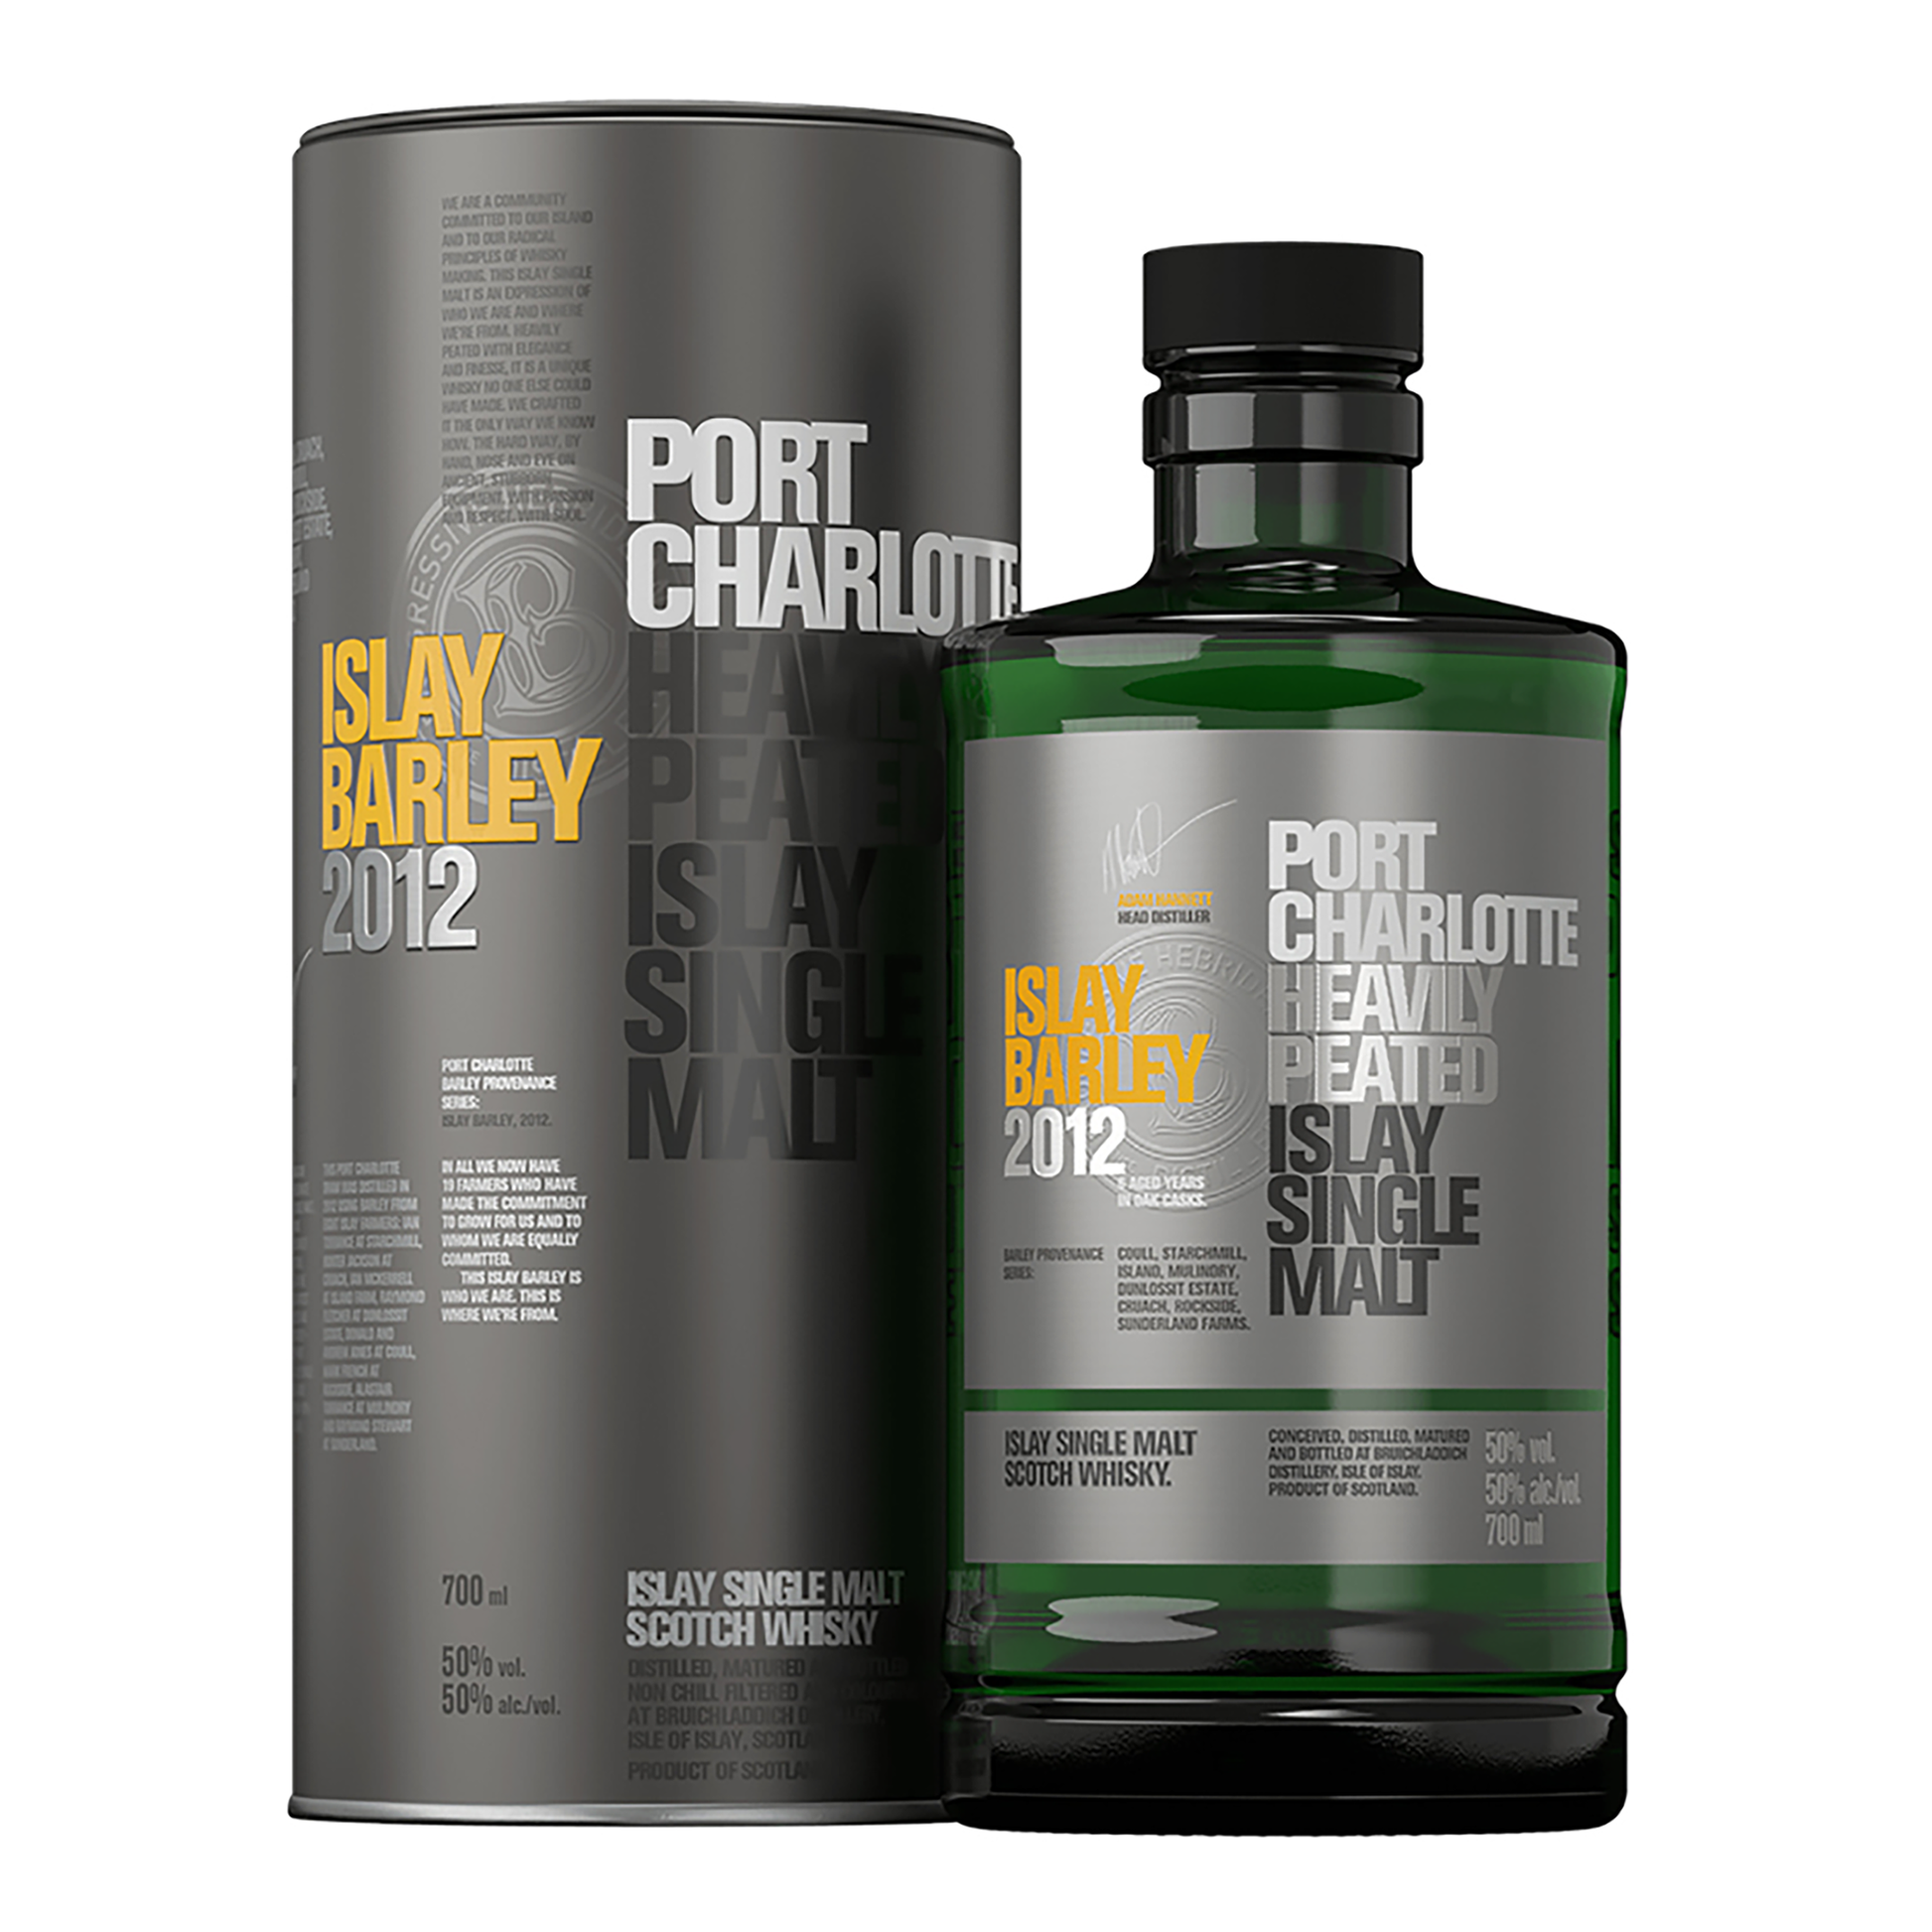 Bruichladdich Port Charlotte Heavily Peated Islay Barley Single Malt Scotch Whisky 700ml (2012 Release) - CBD Cellars